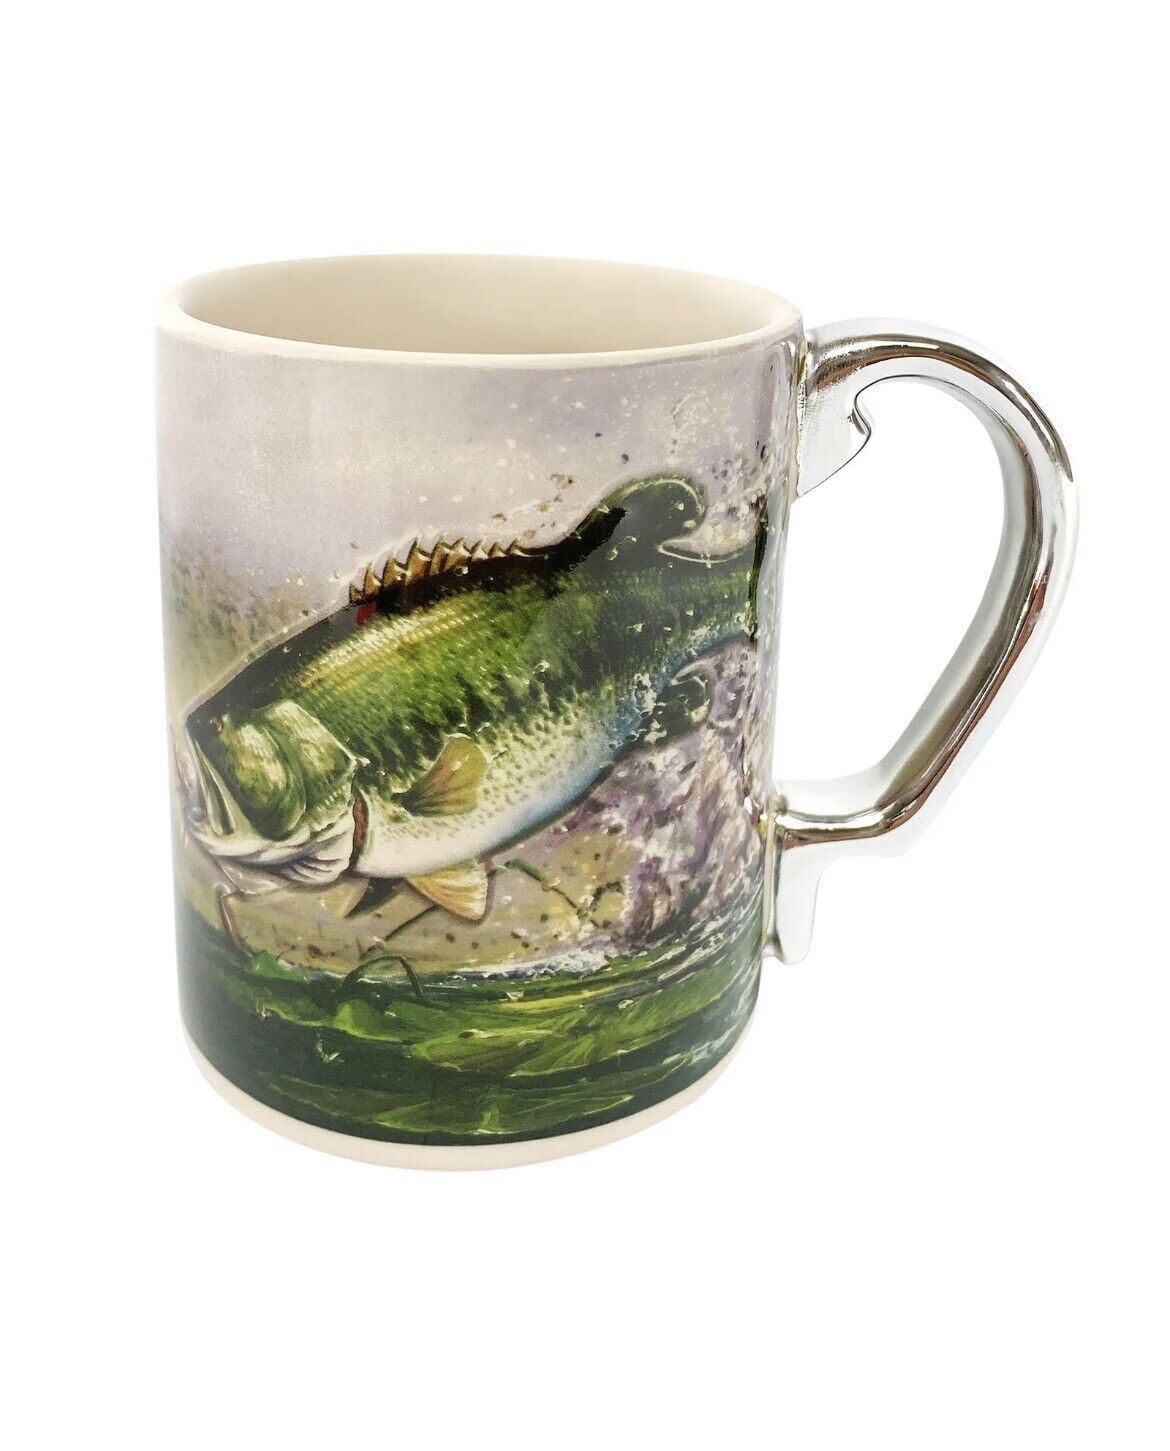 Collectible Bass Fishing Coffee Mug. Ceramic, Holds 15 Oz. NOS